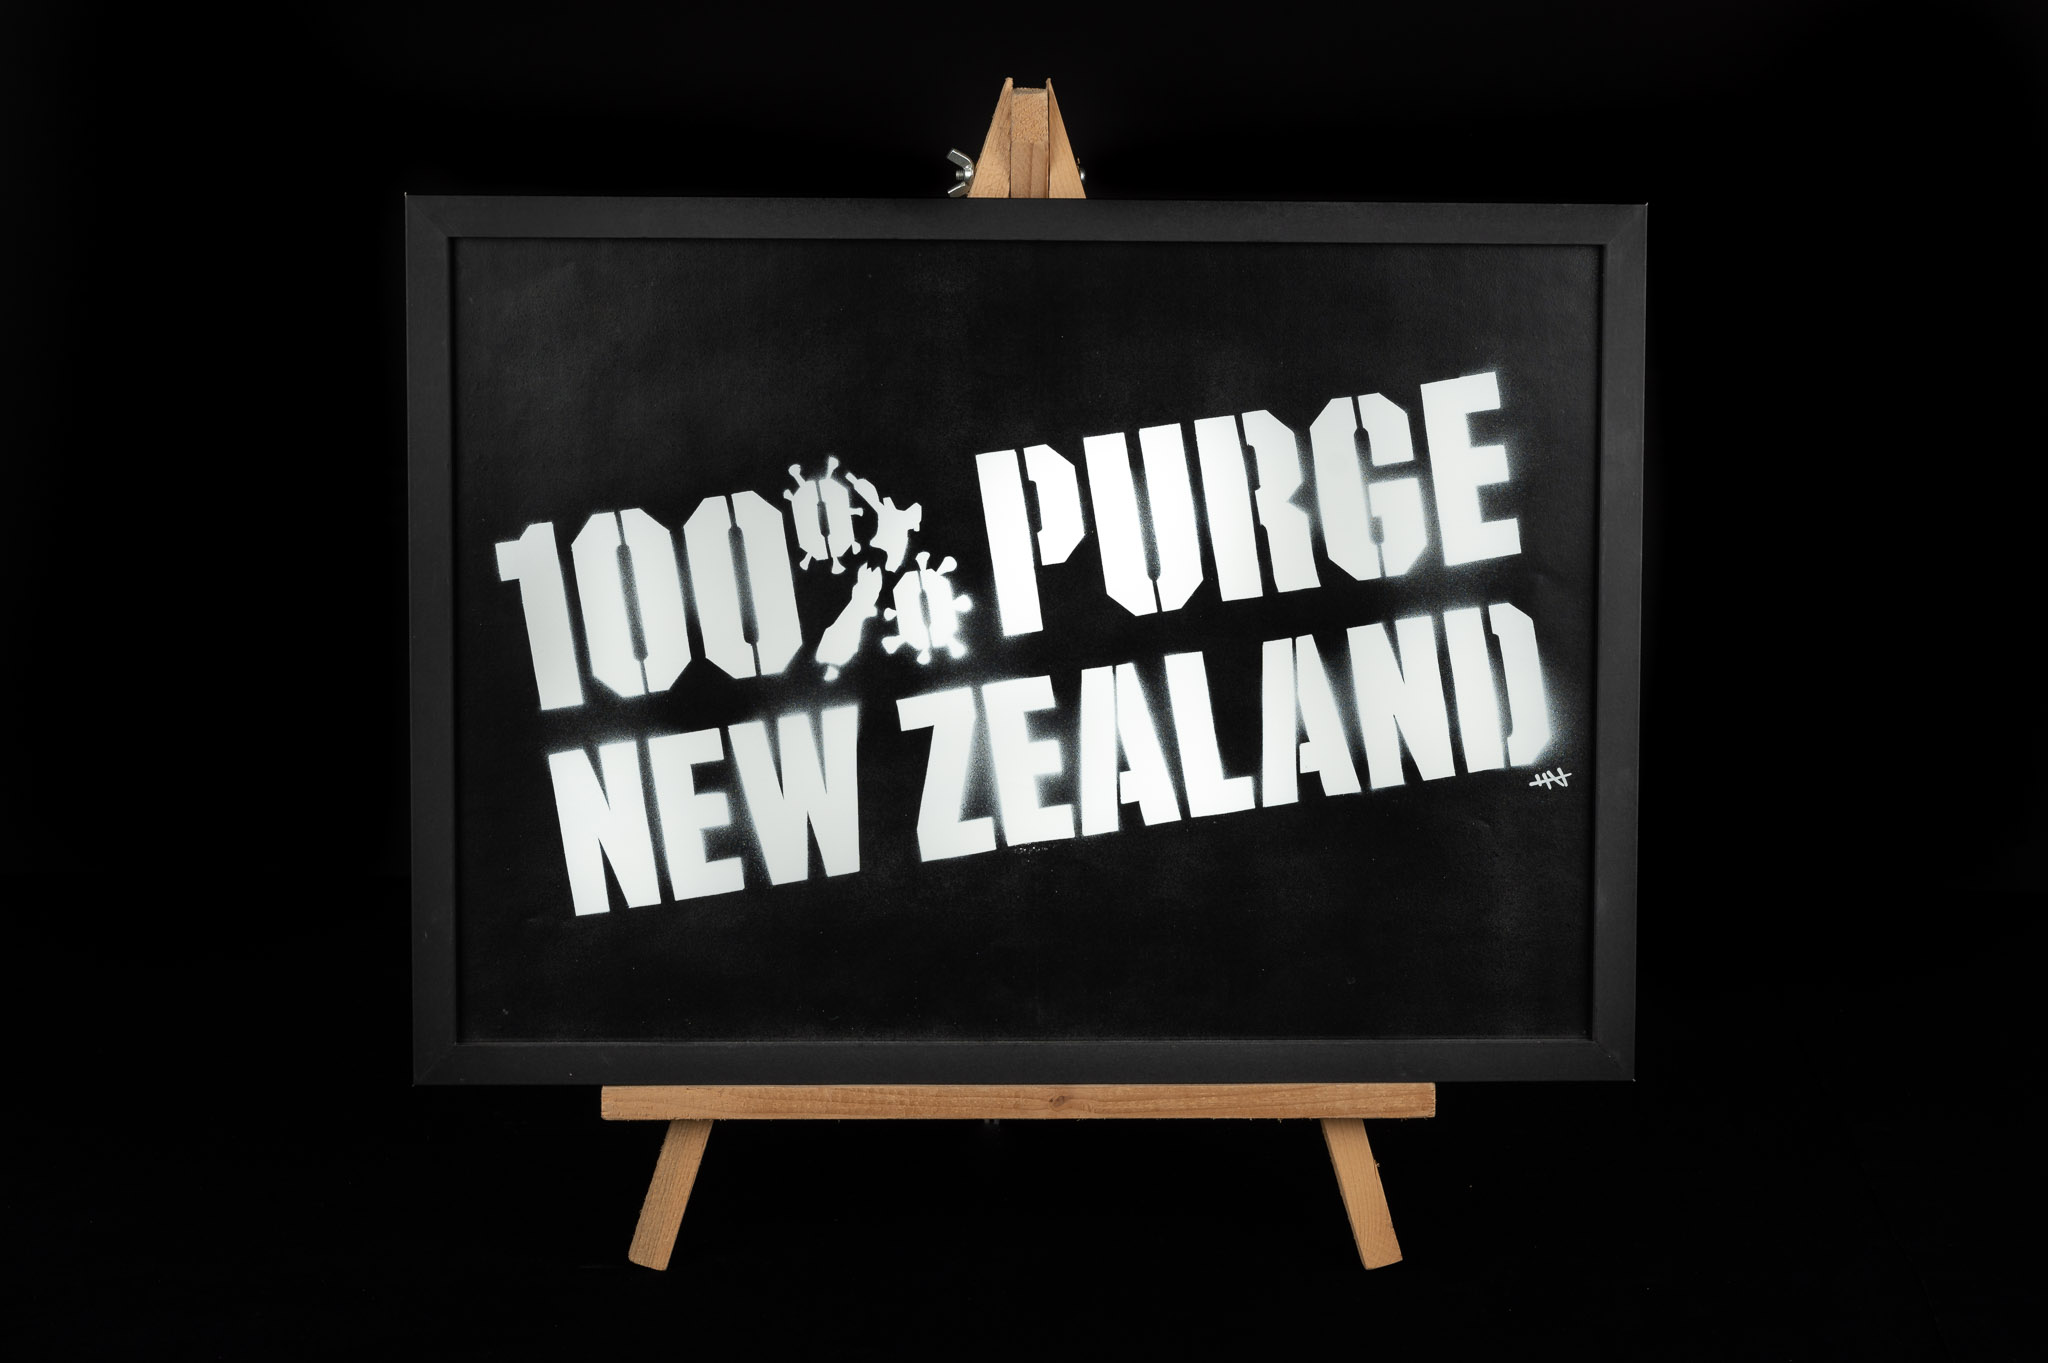 Razor Taser Laser Art United Rotorua Stencil Graffiti Artist 100%purge New Zealand